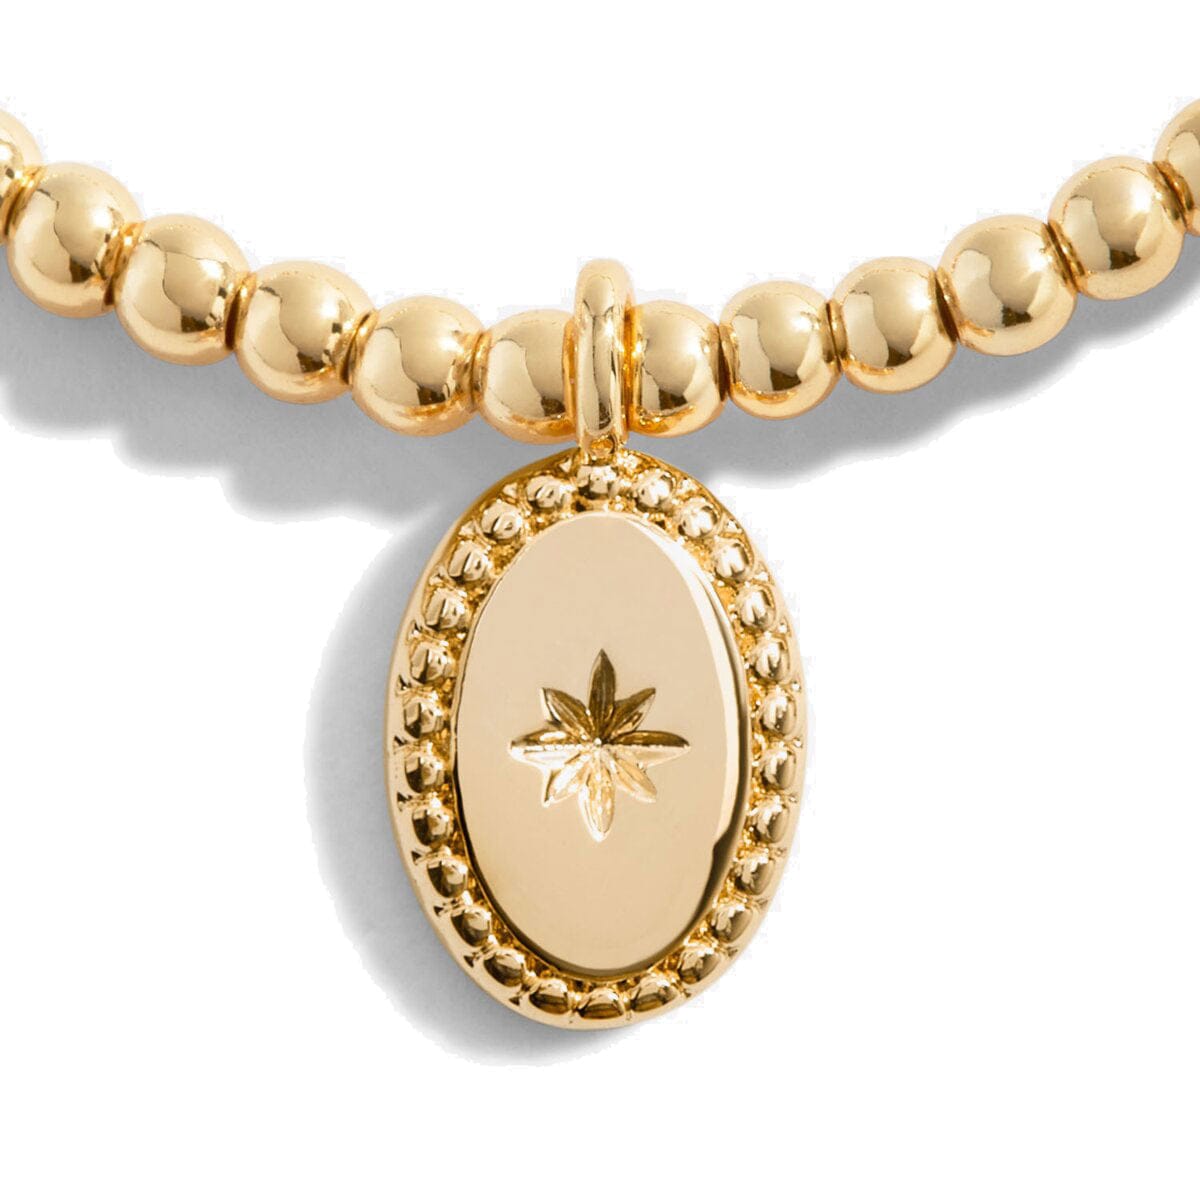 Joma Jewellery Bracelet Joma Jewellery Gold Plated Bracelet - A Little Forever Remembered